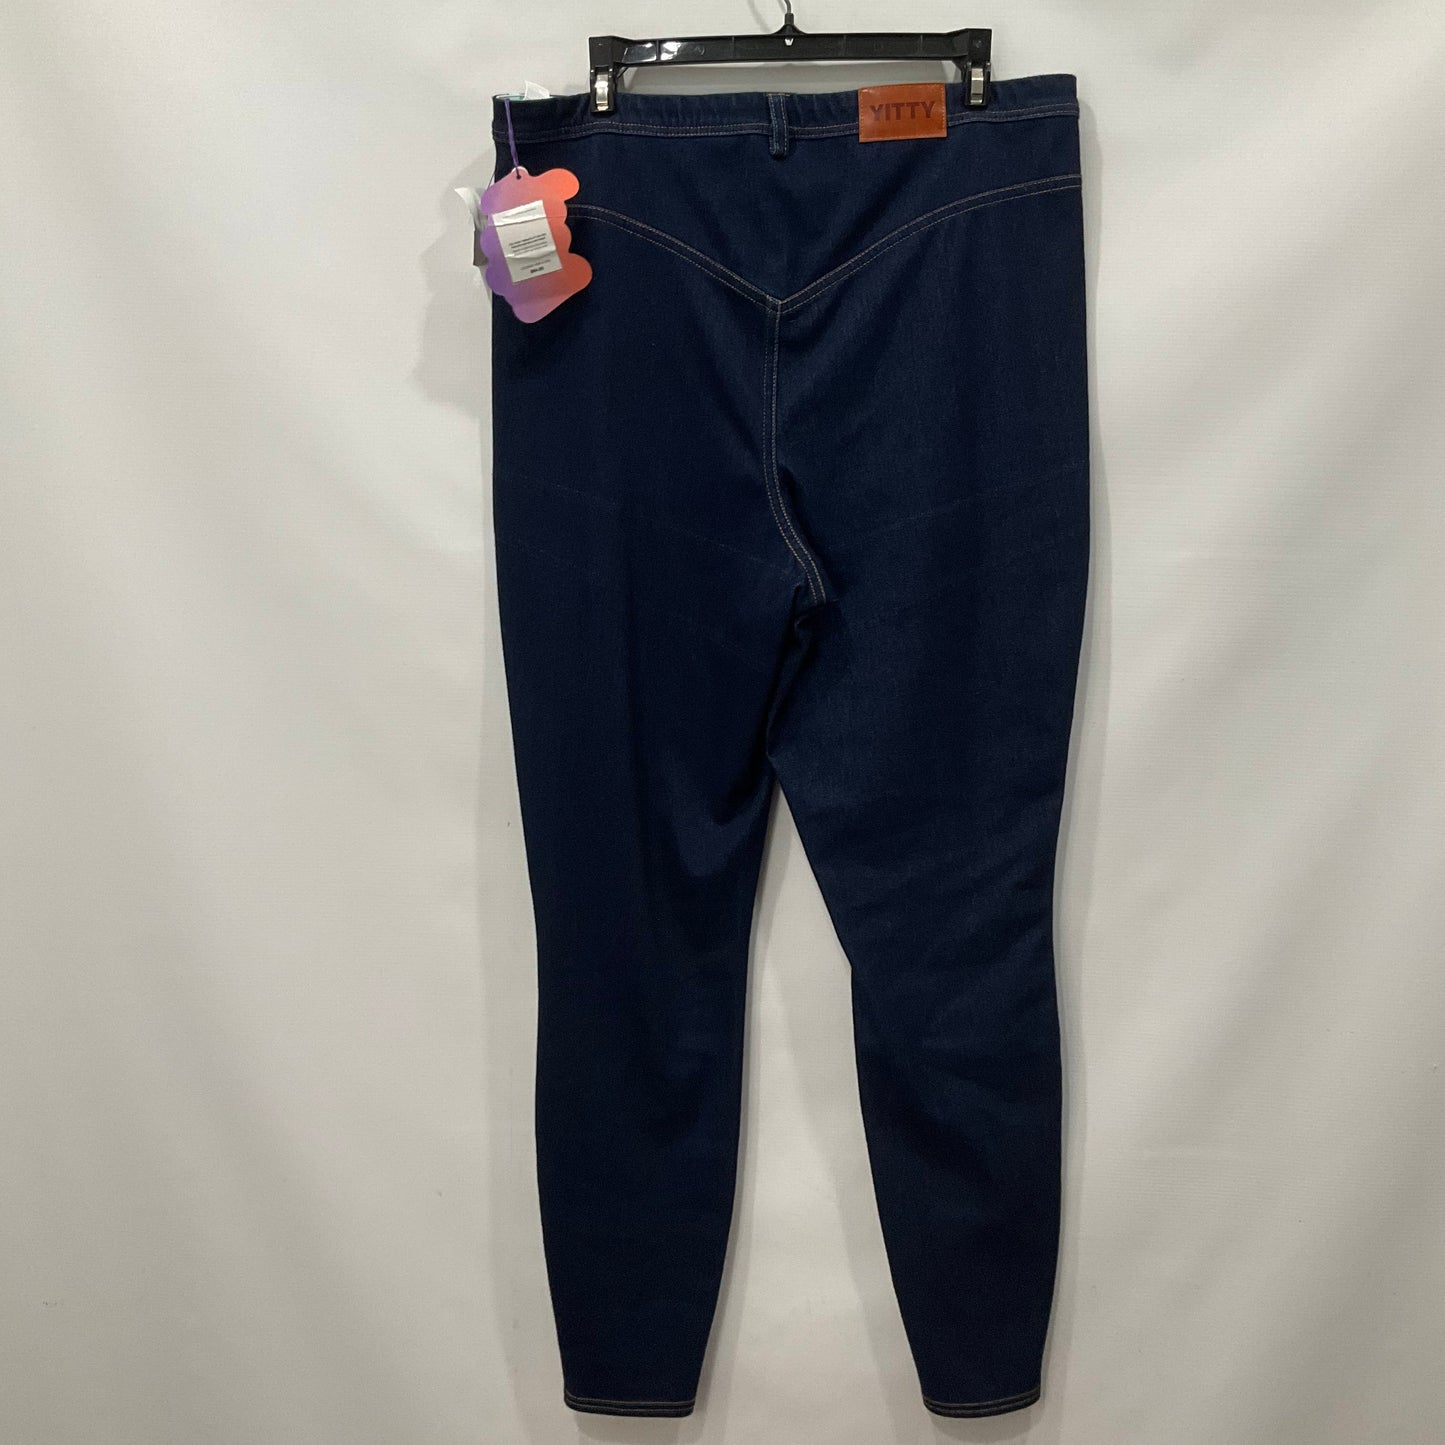 Blue Denim Jeans Jeggings Yitty, Size 1x